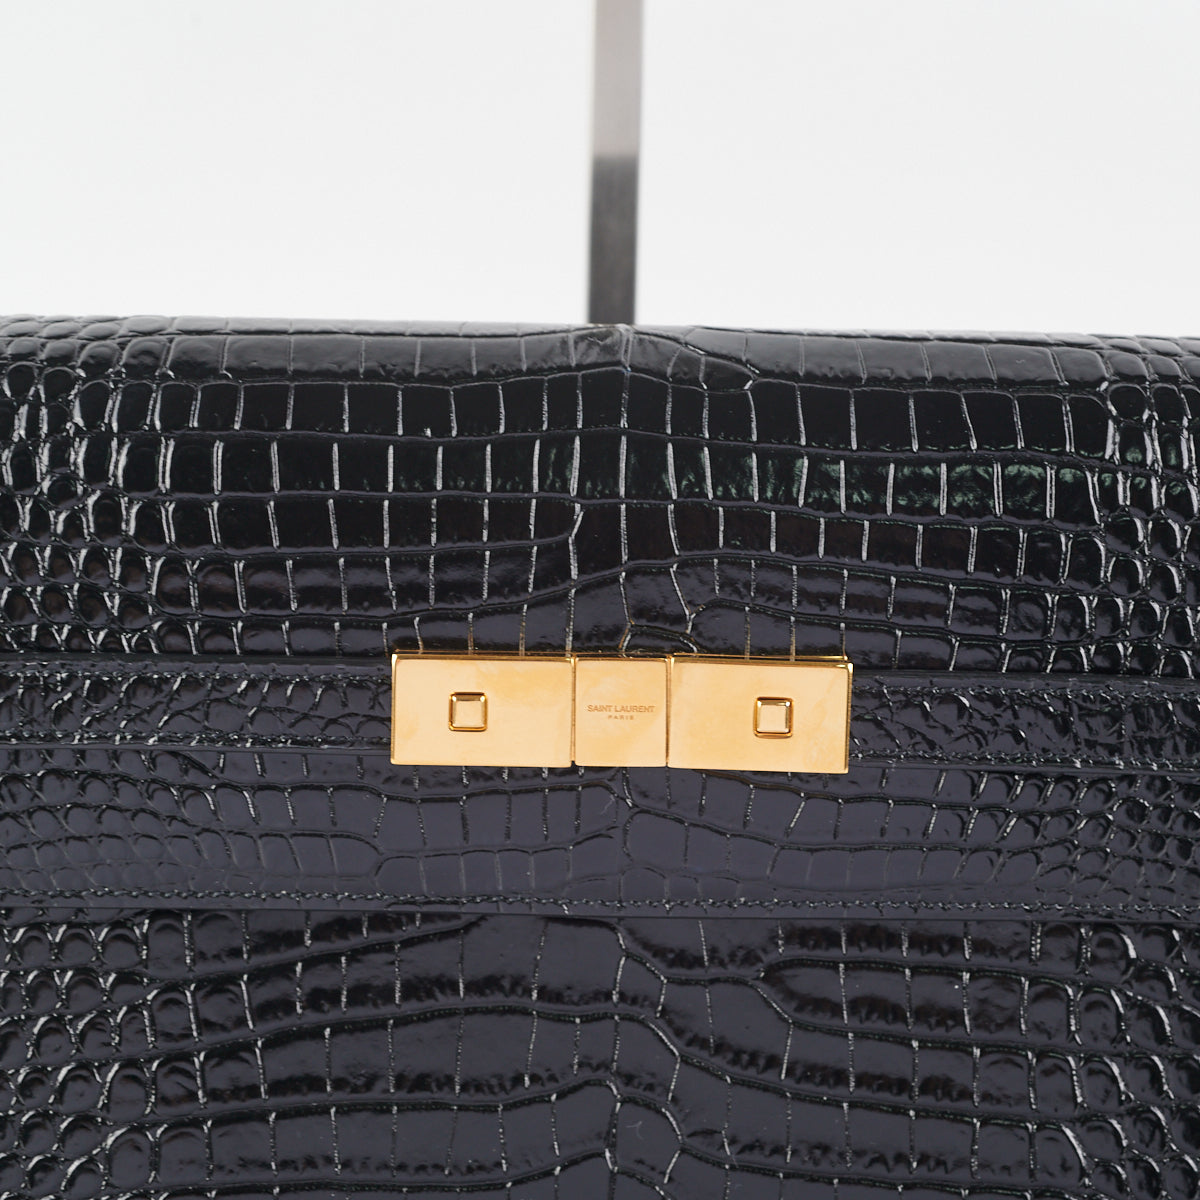 Yves Saint Laurent Manhattan Bag Navy Blue Crocodile Embossed Leather